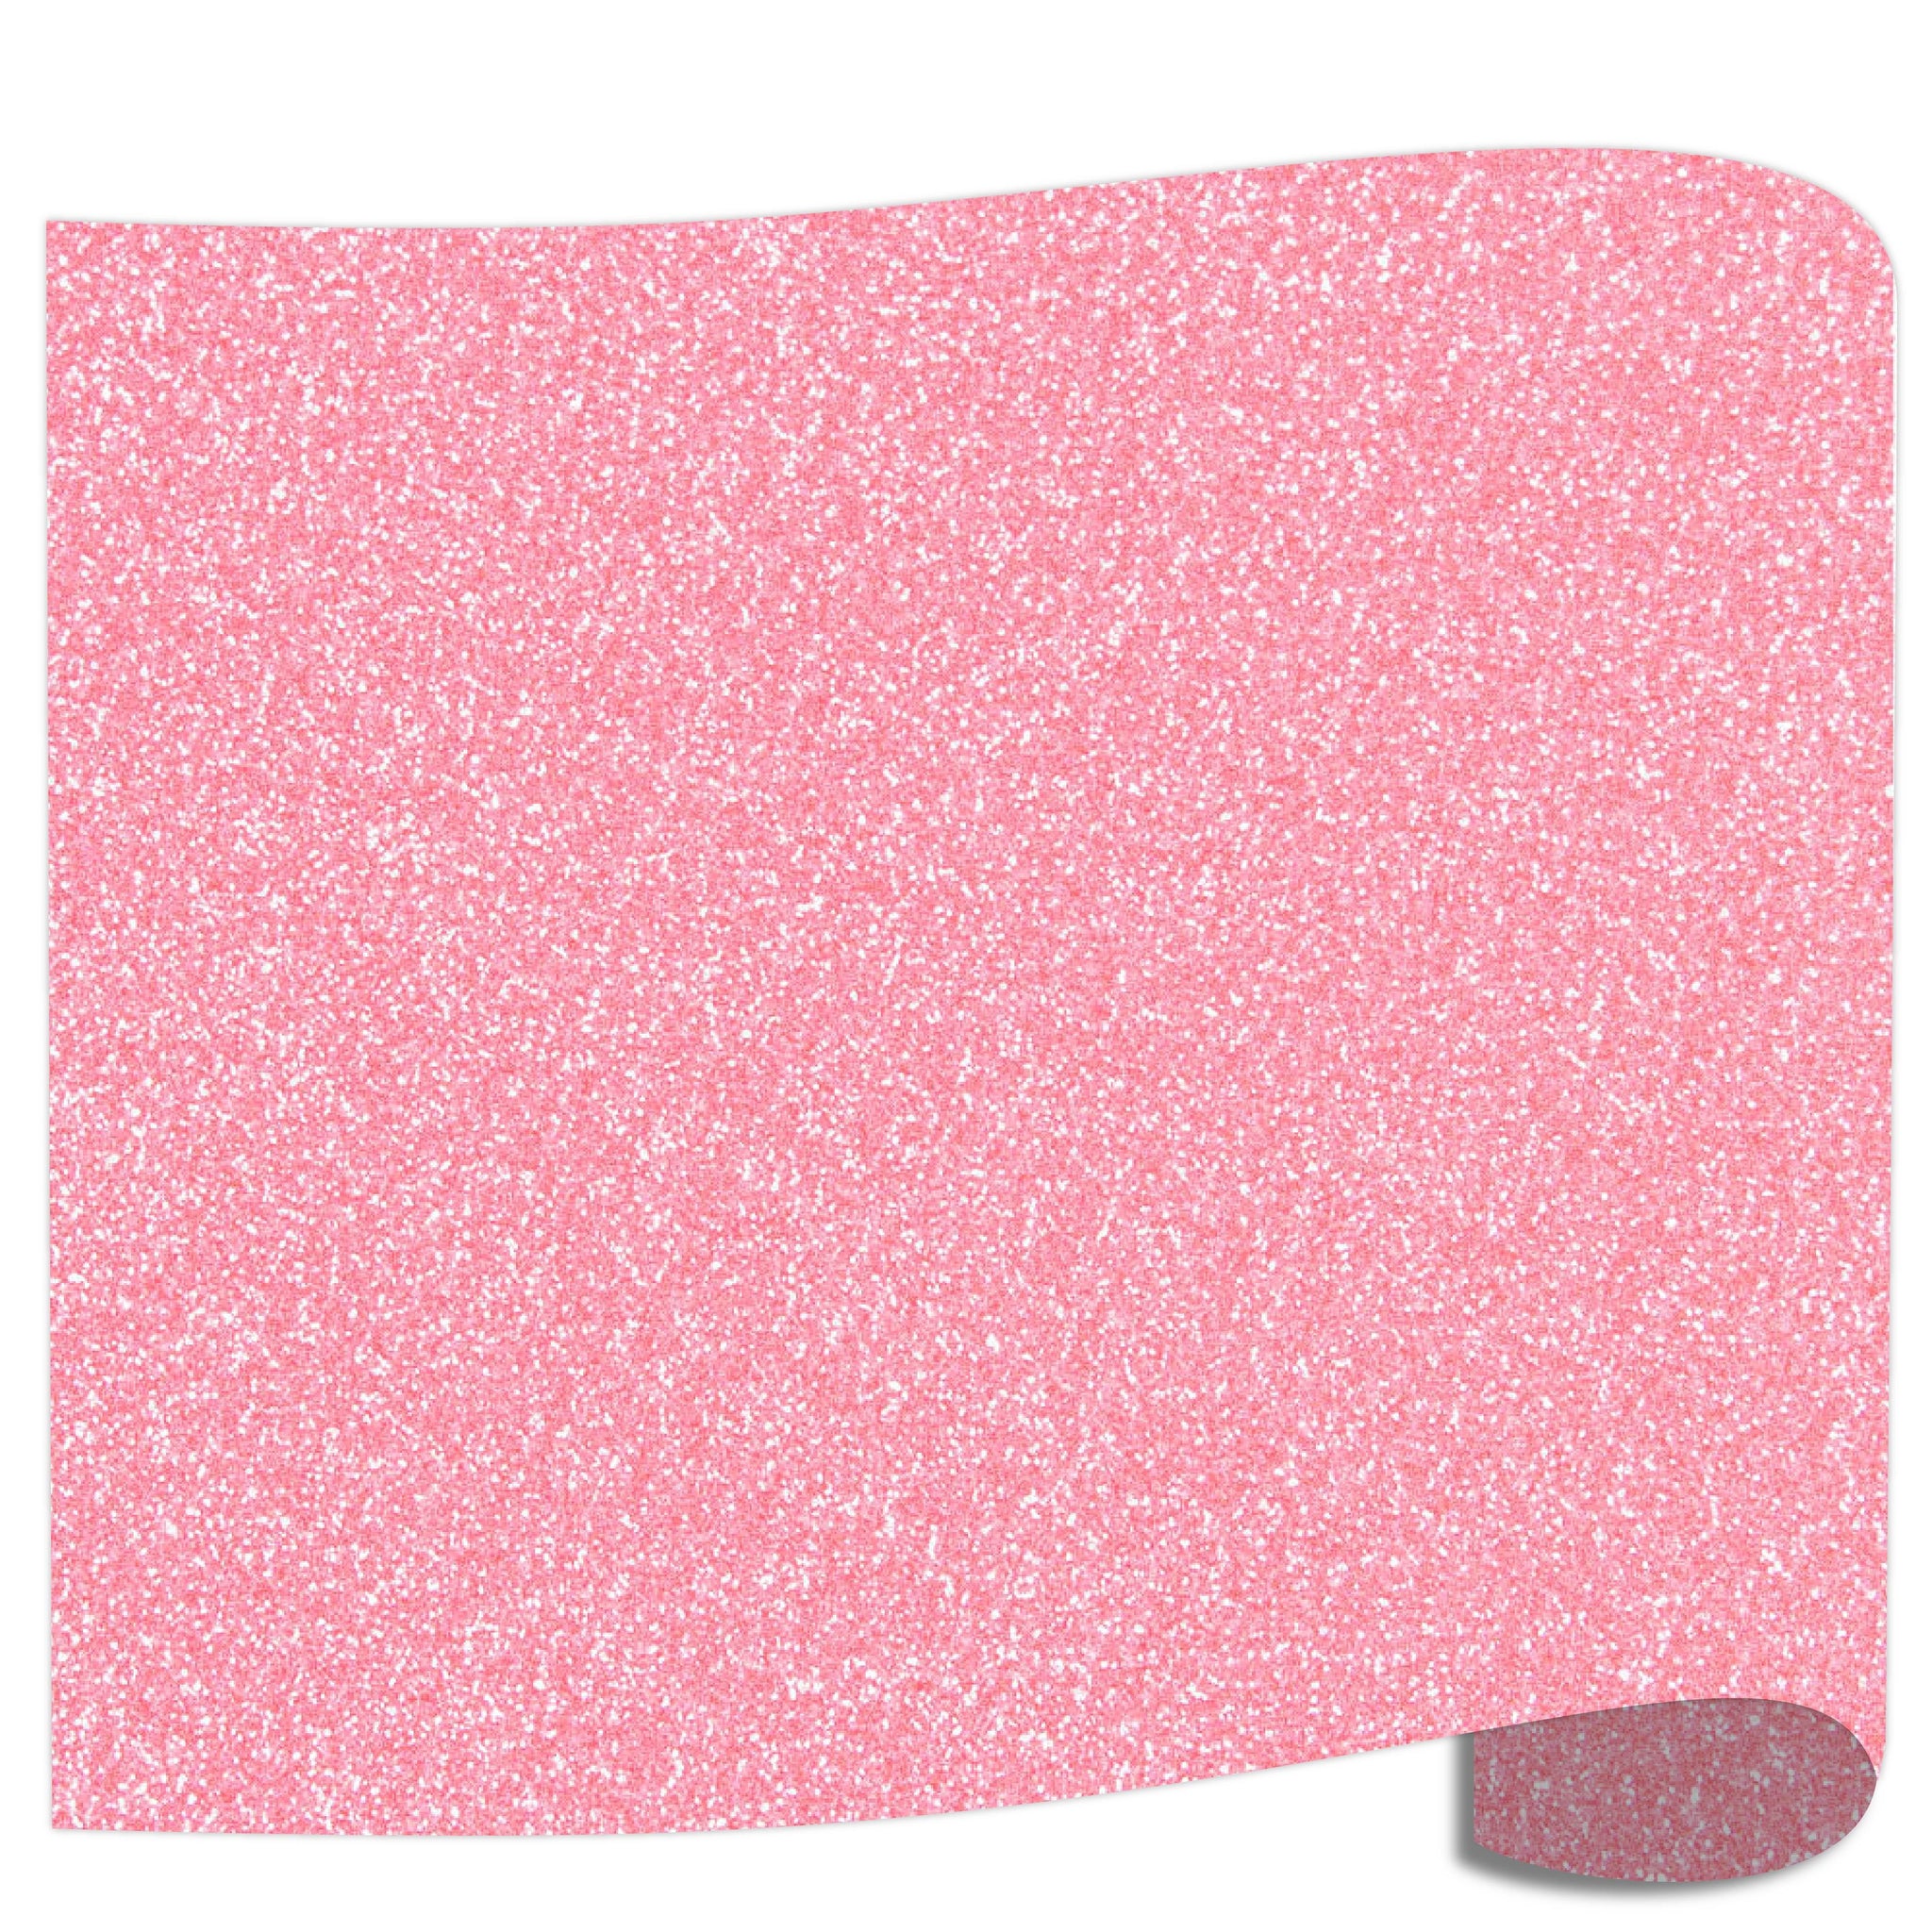 Hot Pink Glitter HTV 12” x 19.5” Sheet - Heat Transfer Vinyl